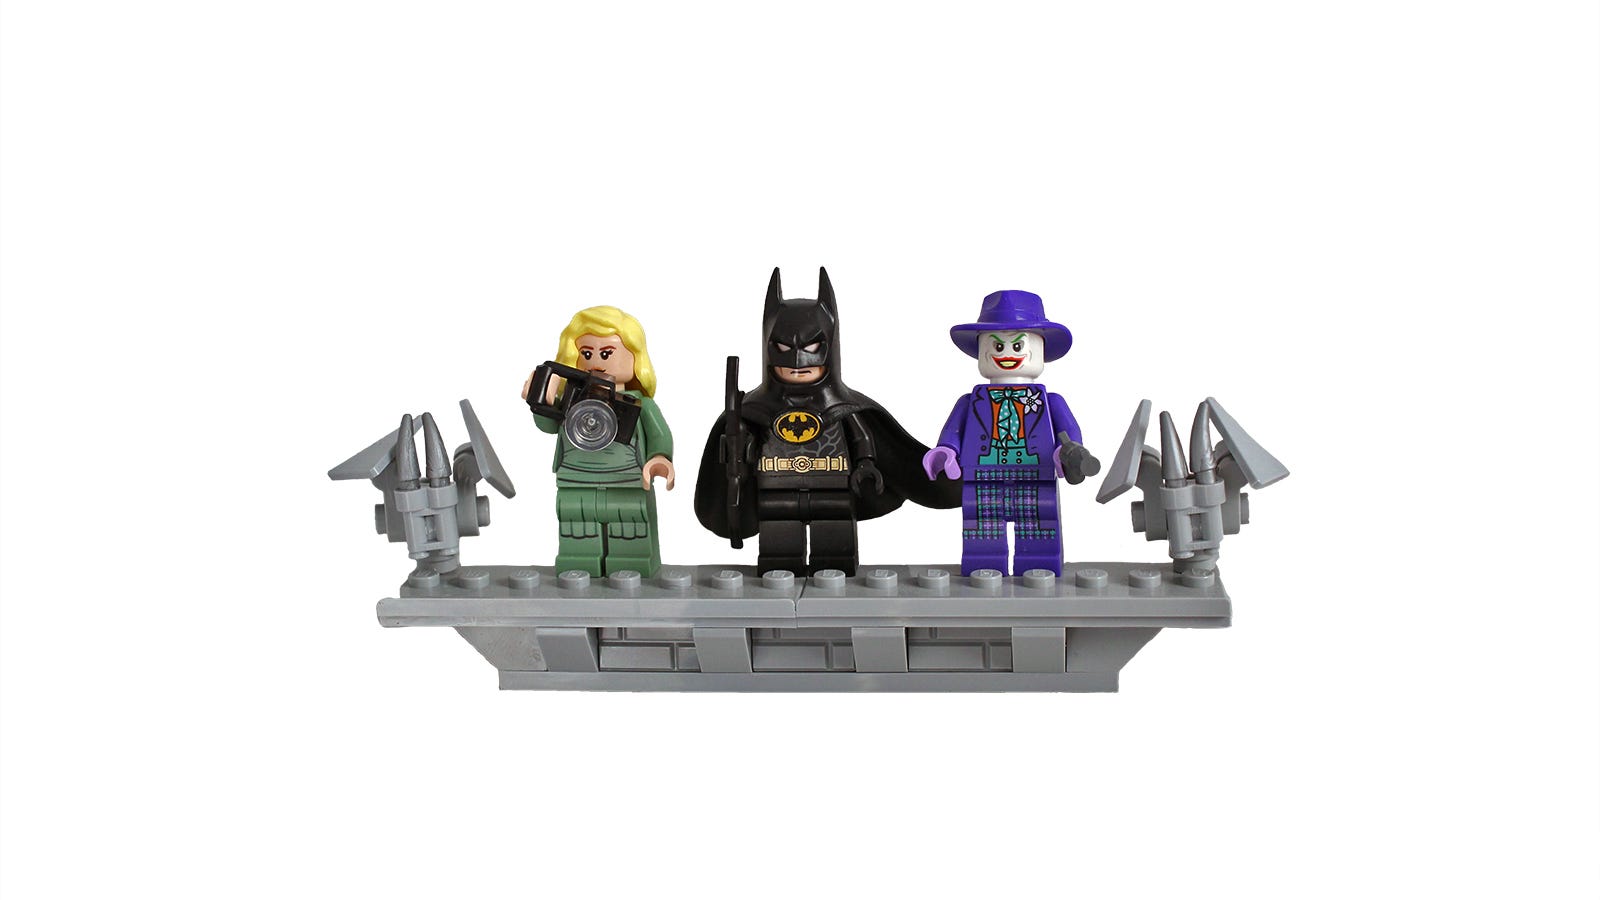 Tampilan jarak dekat dari Vicky Vale, Batman dan Joker dalam bentuk LEGO berdiri di samping gargoyle LEGO.